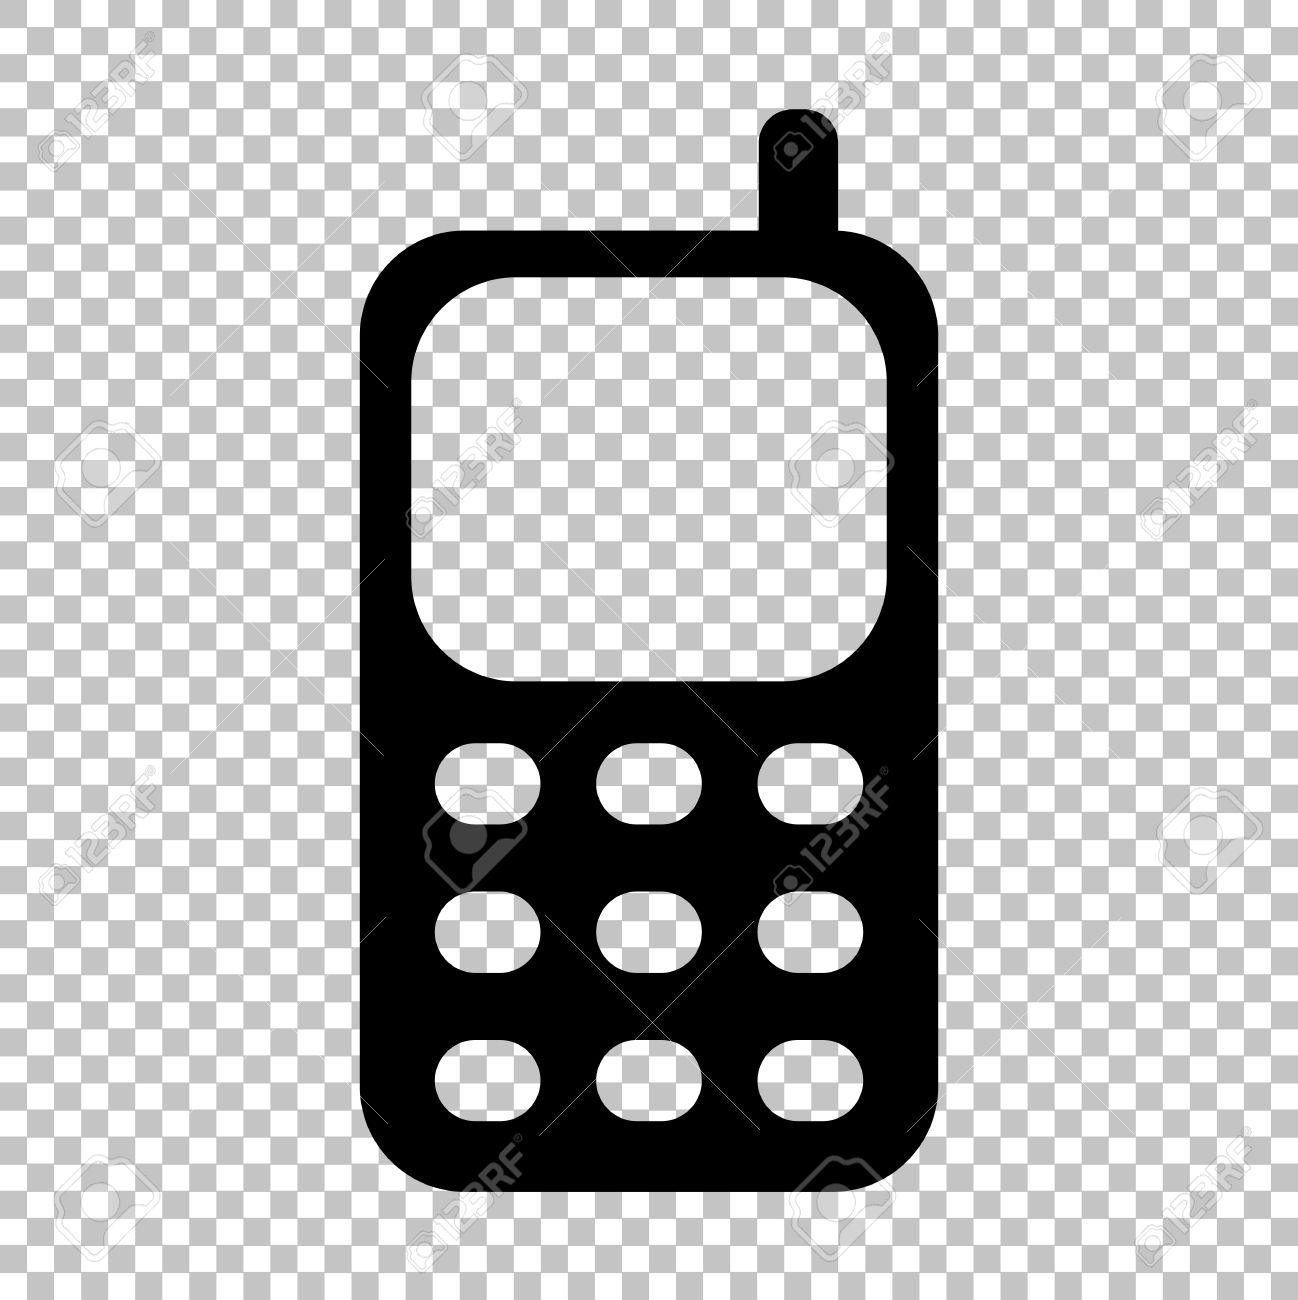 Sellphone icon. Black icon on transparent background. Stock image 